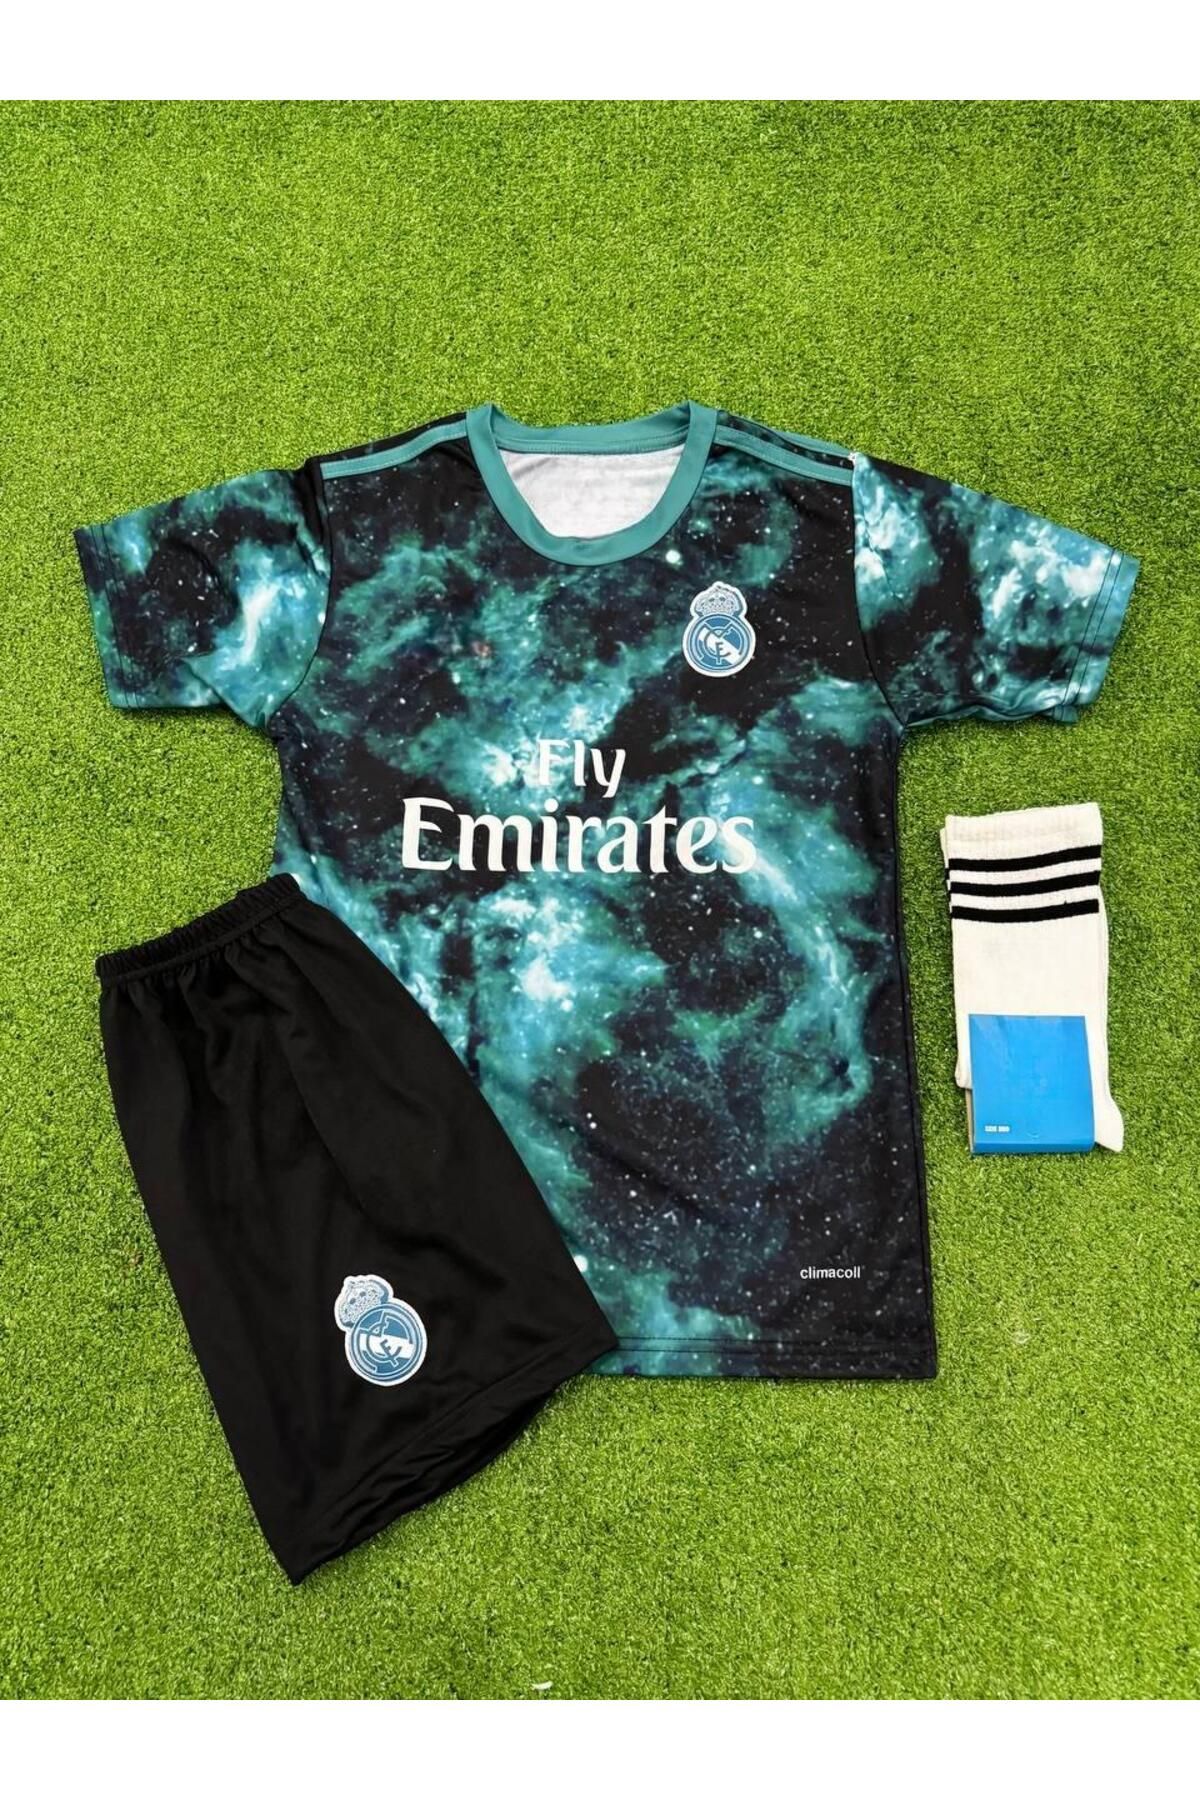 Alaturka Mix Ronaldo Realmadrid Galaxy Çocuk Futbol Forması 3'lü Set Forma Şort Çorap